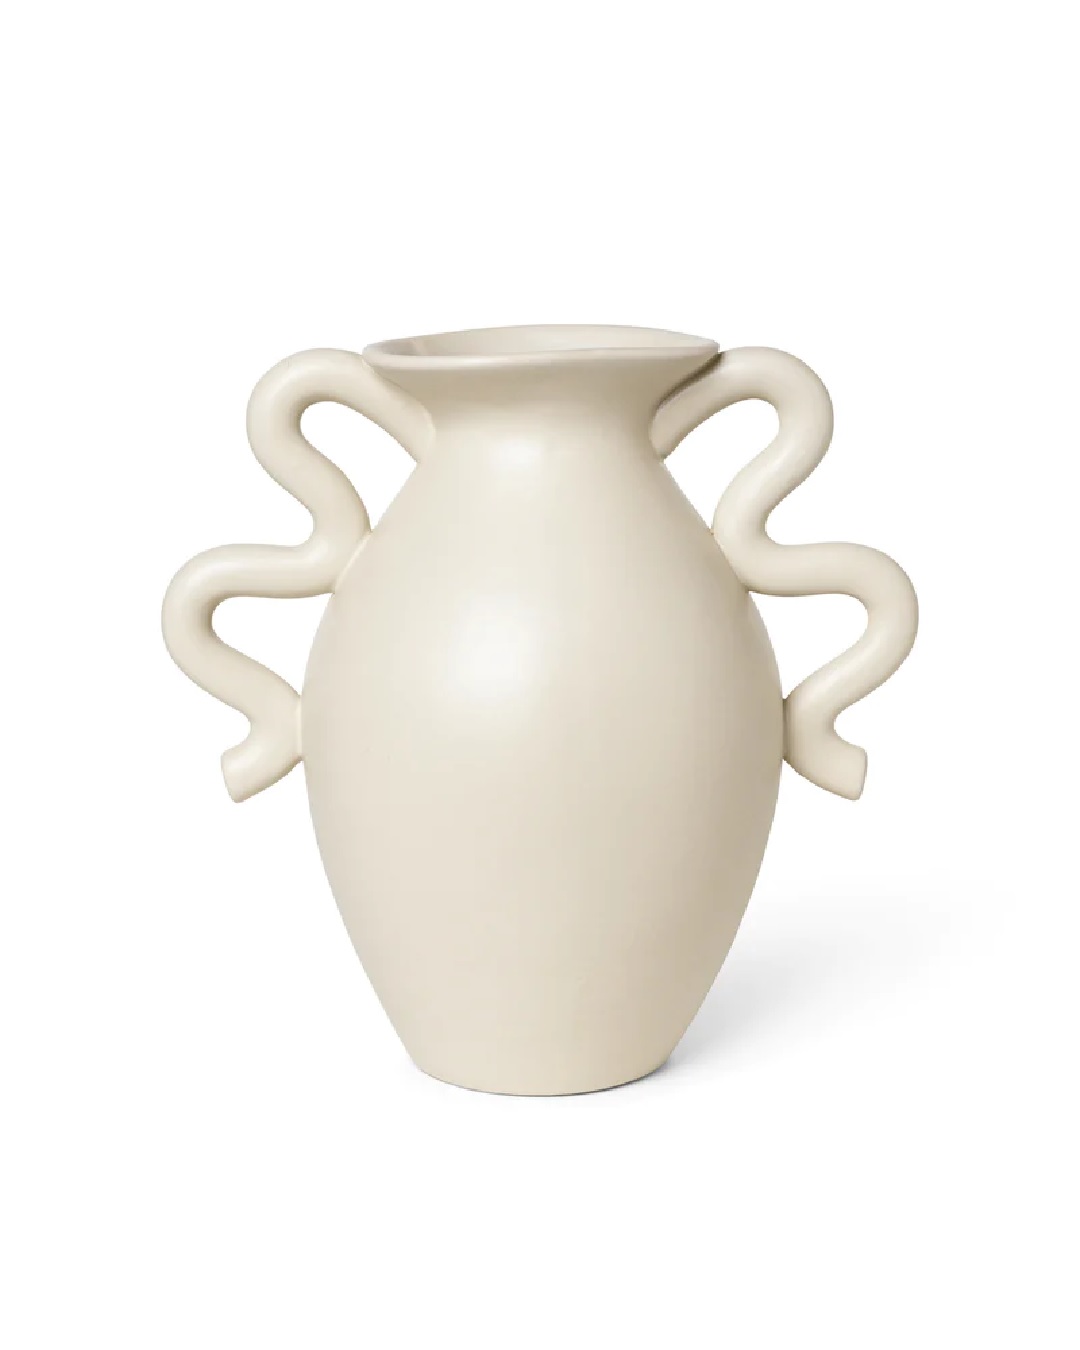 Verso table vase in cream